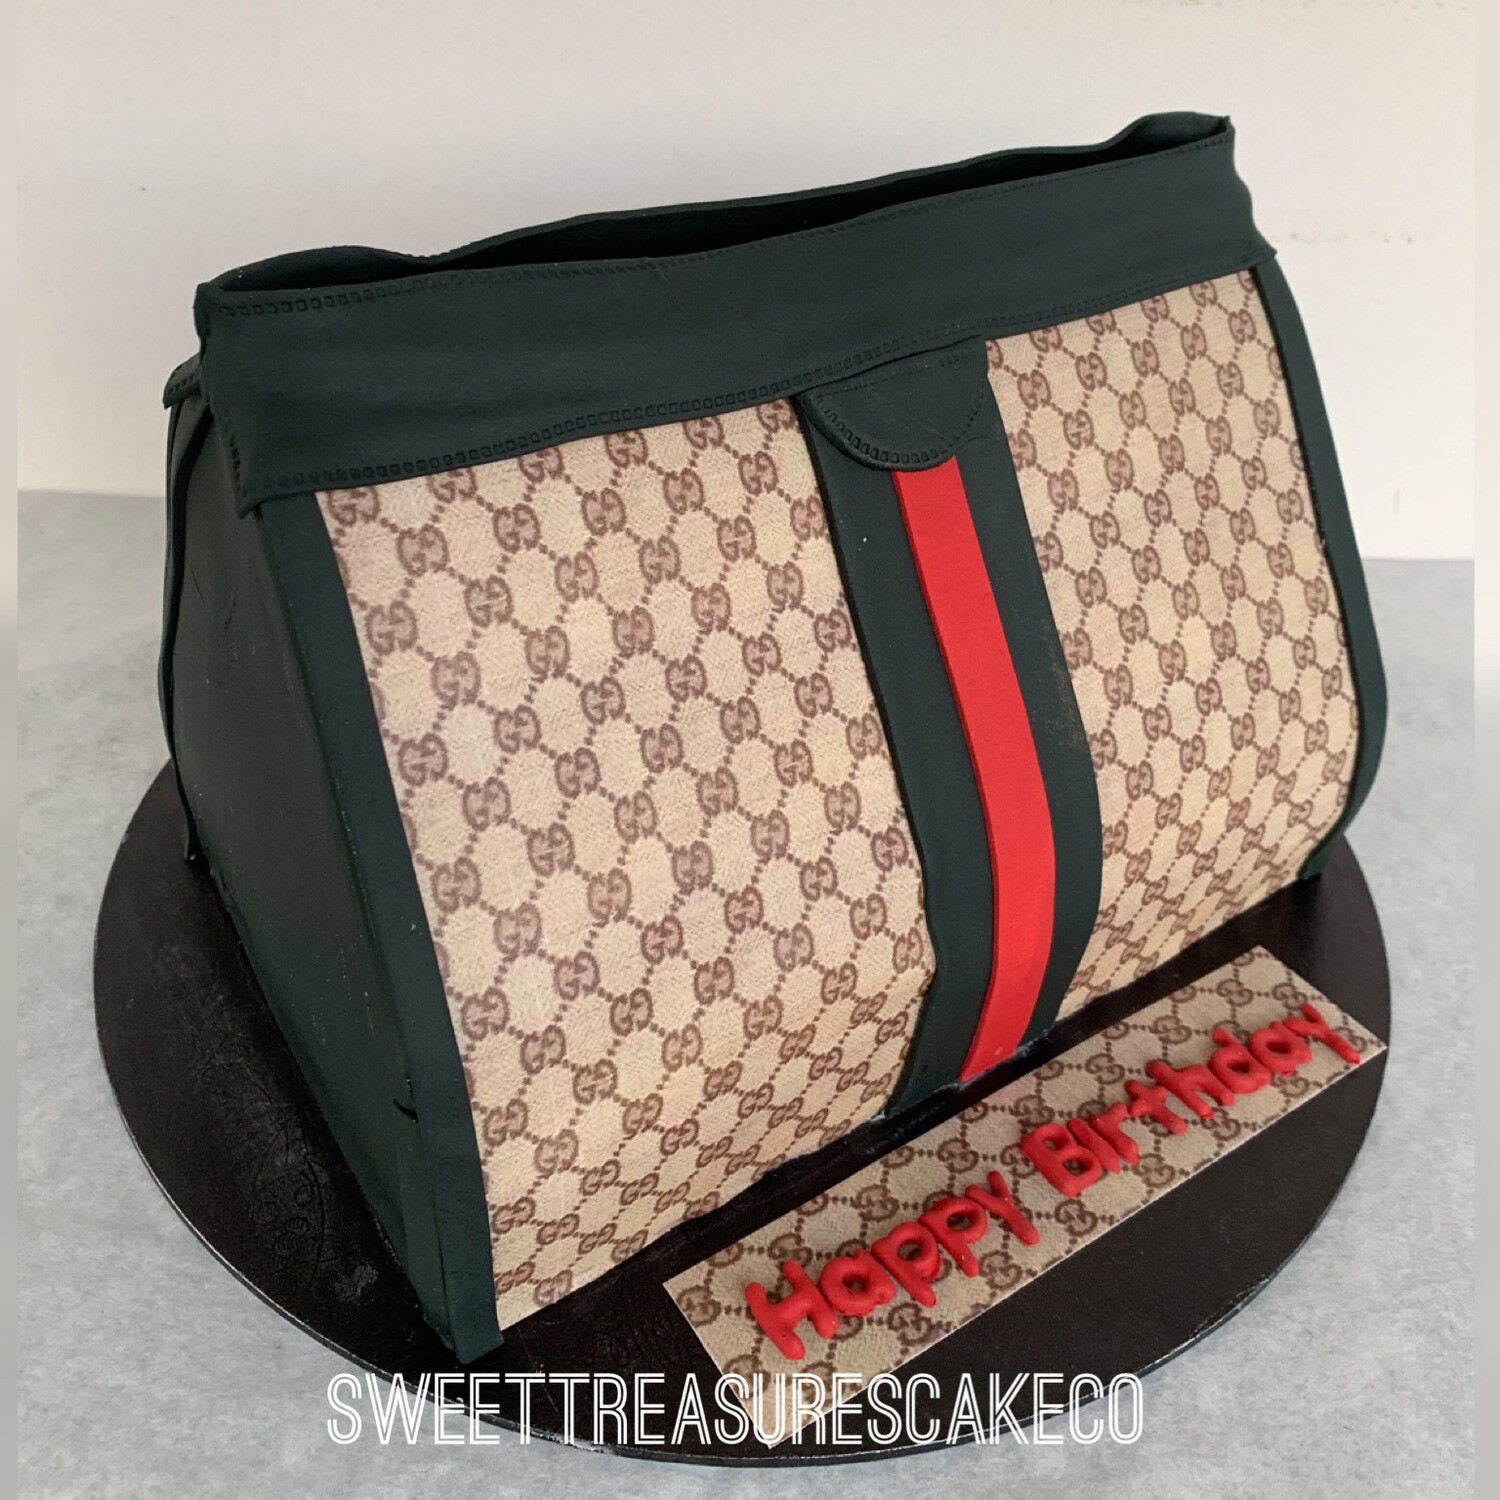 Gucci Bag Single tier Cake